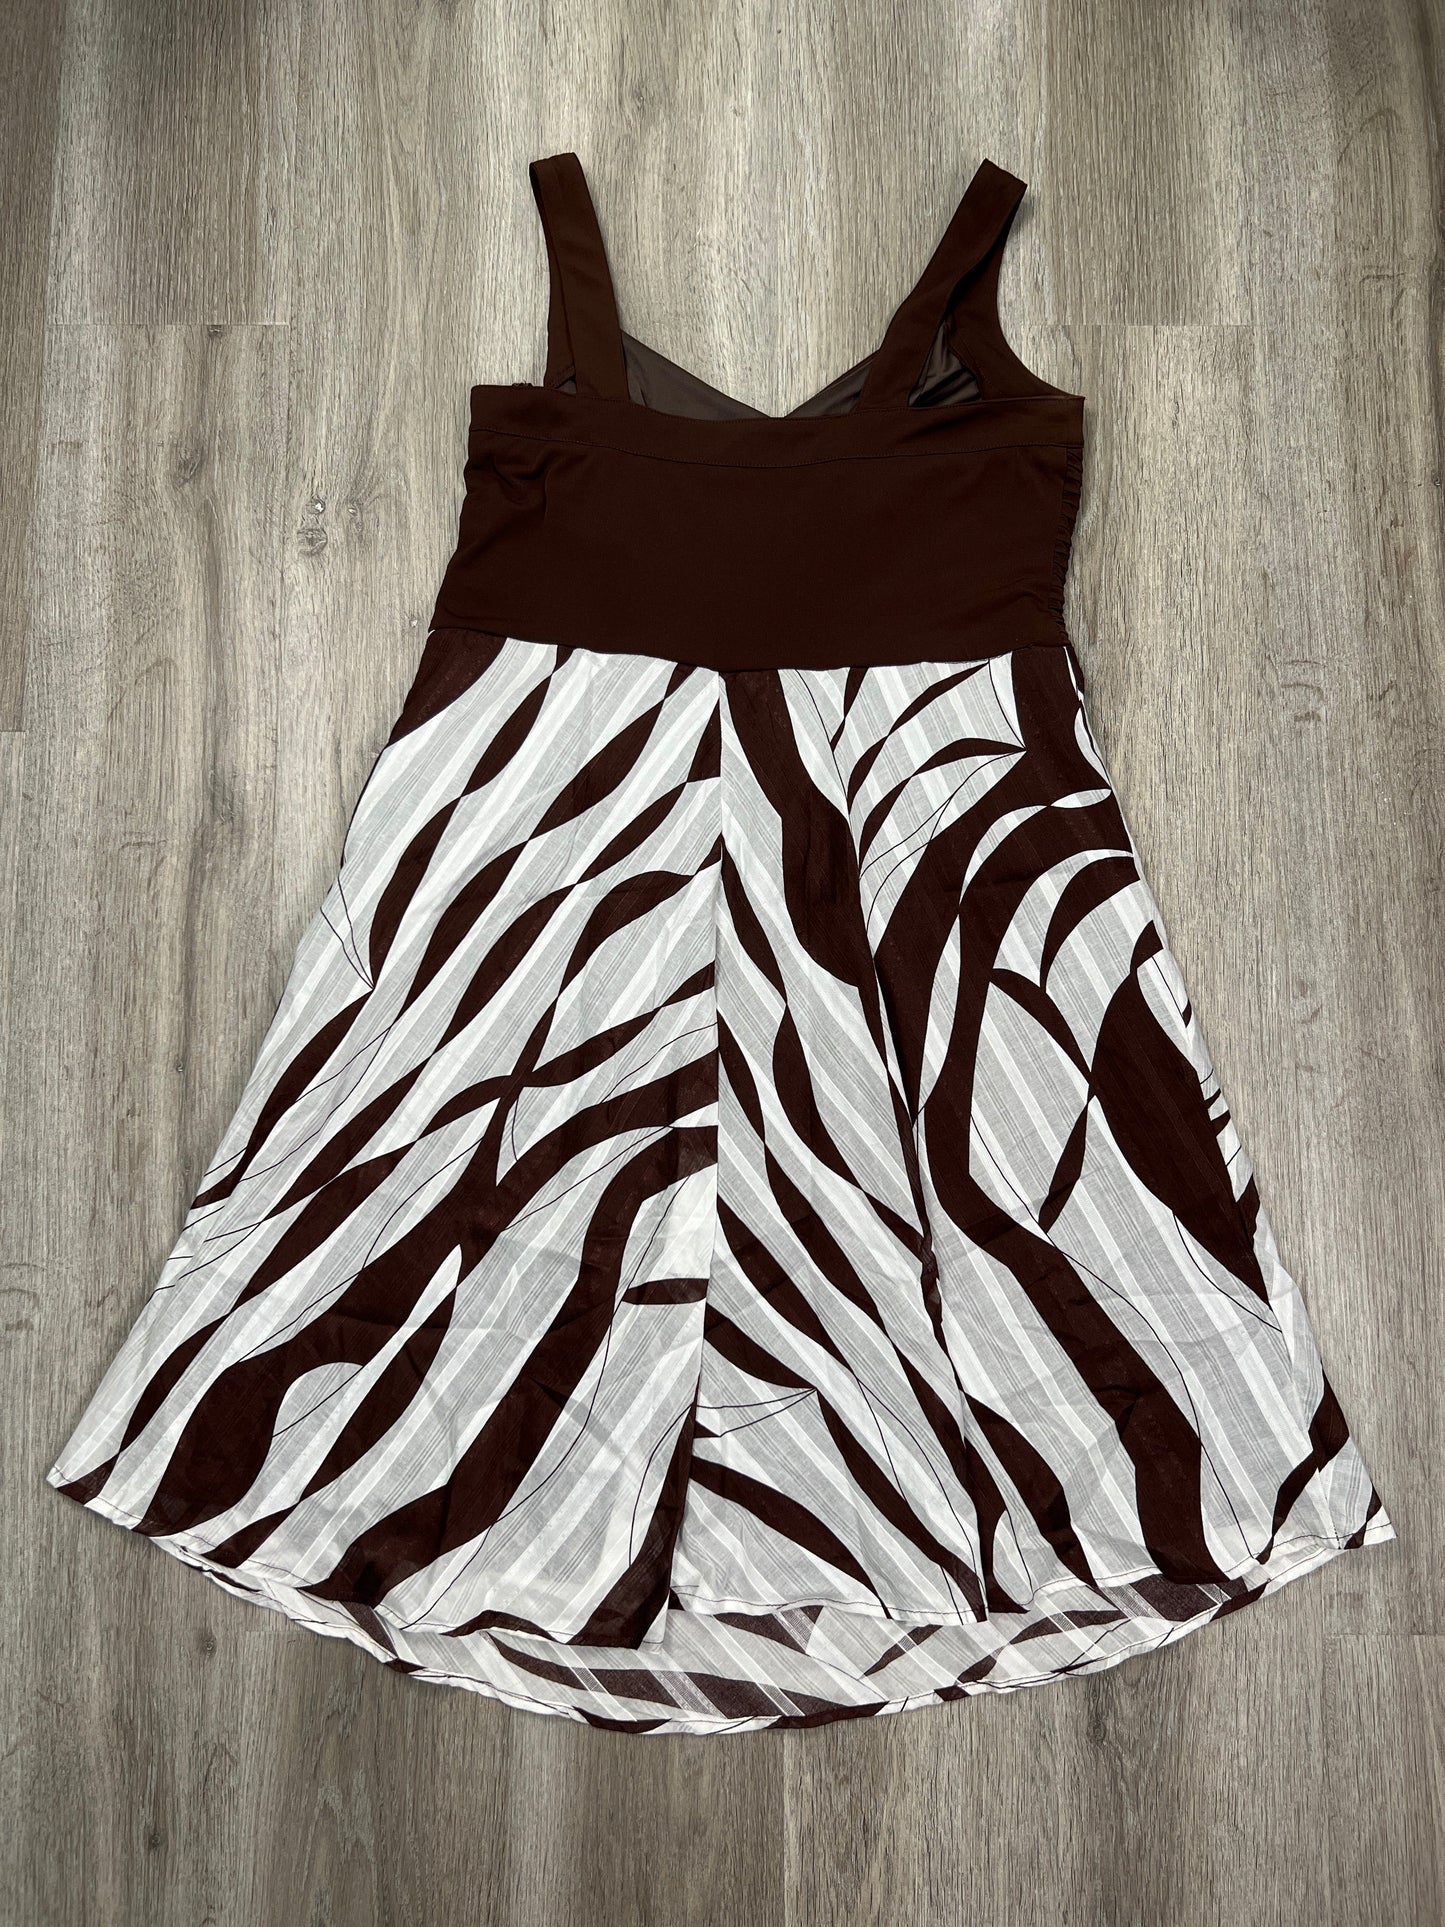 Brown & White Dress Casual Midi Dressbarn, Size Xl